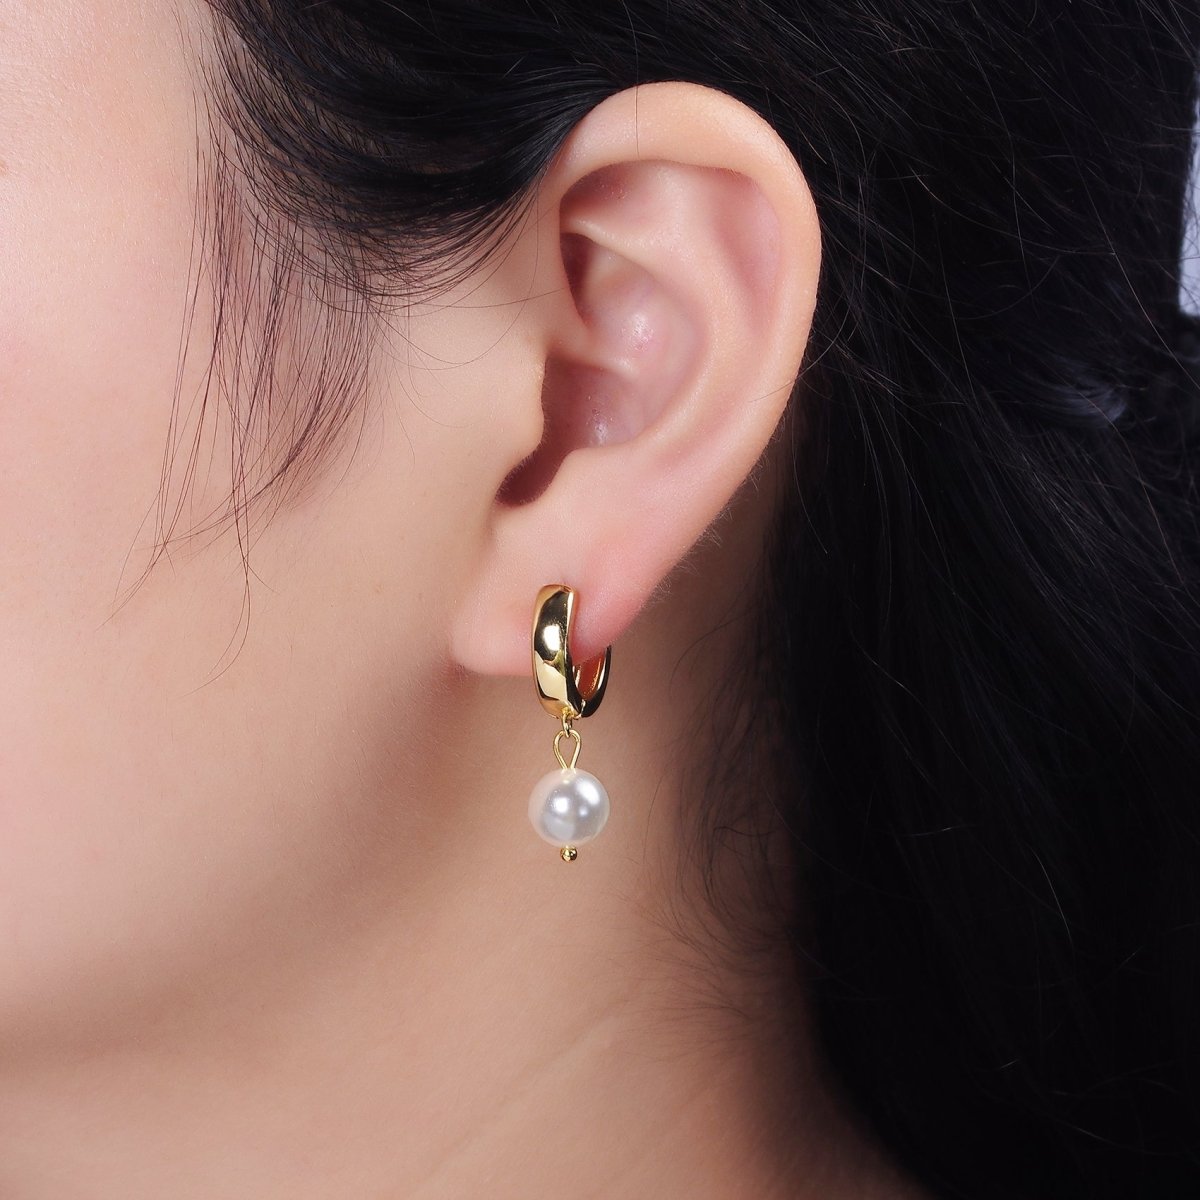 OS 14K Gold Filled Shell Pearl Drop Huggie Earrings Lever Back Hoop Earring | AE673 - DLUXCA